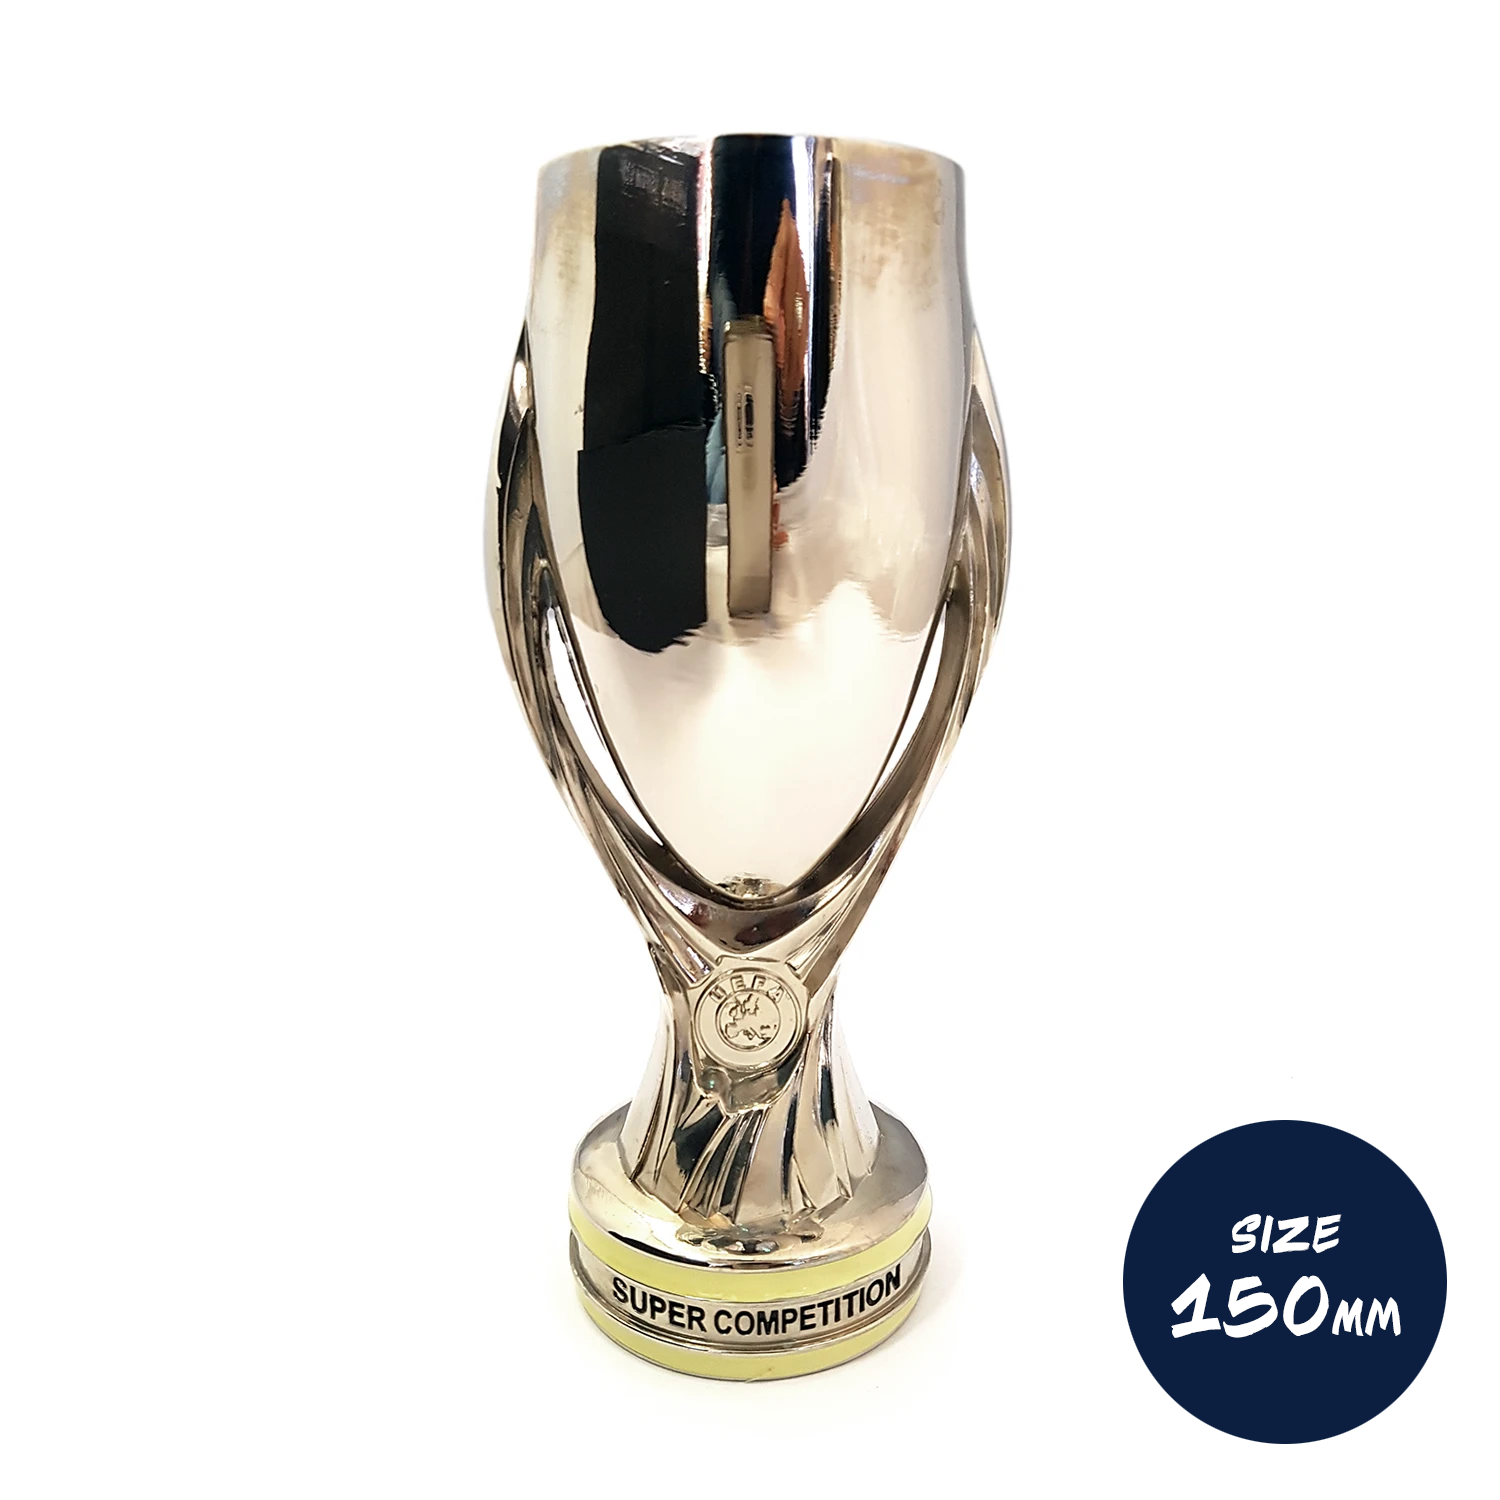 UEFA Super Cup 150mm 3D Replica Trophy UEFA Club Competitions